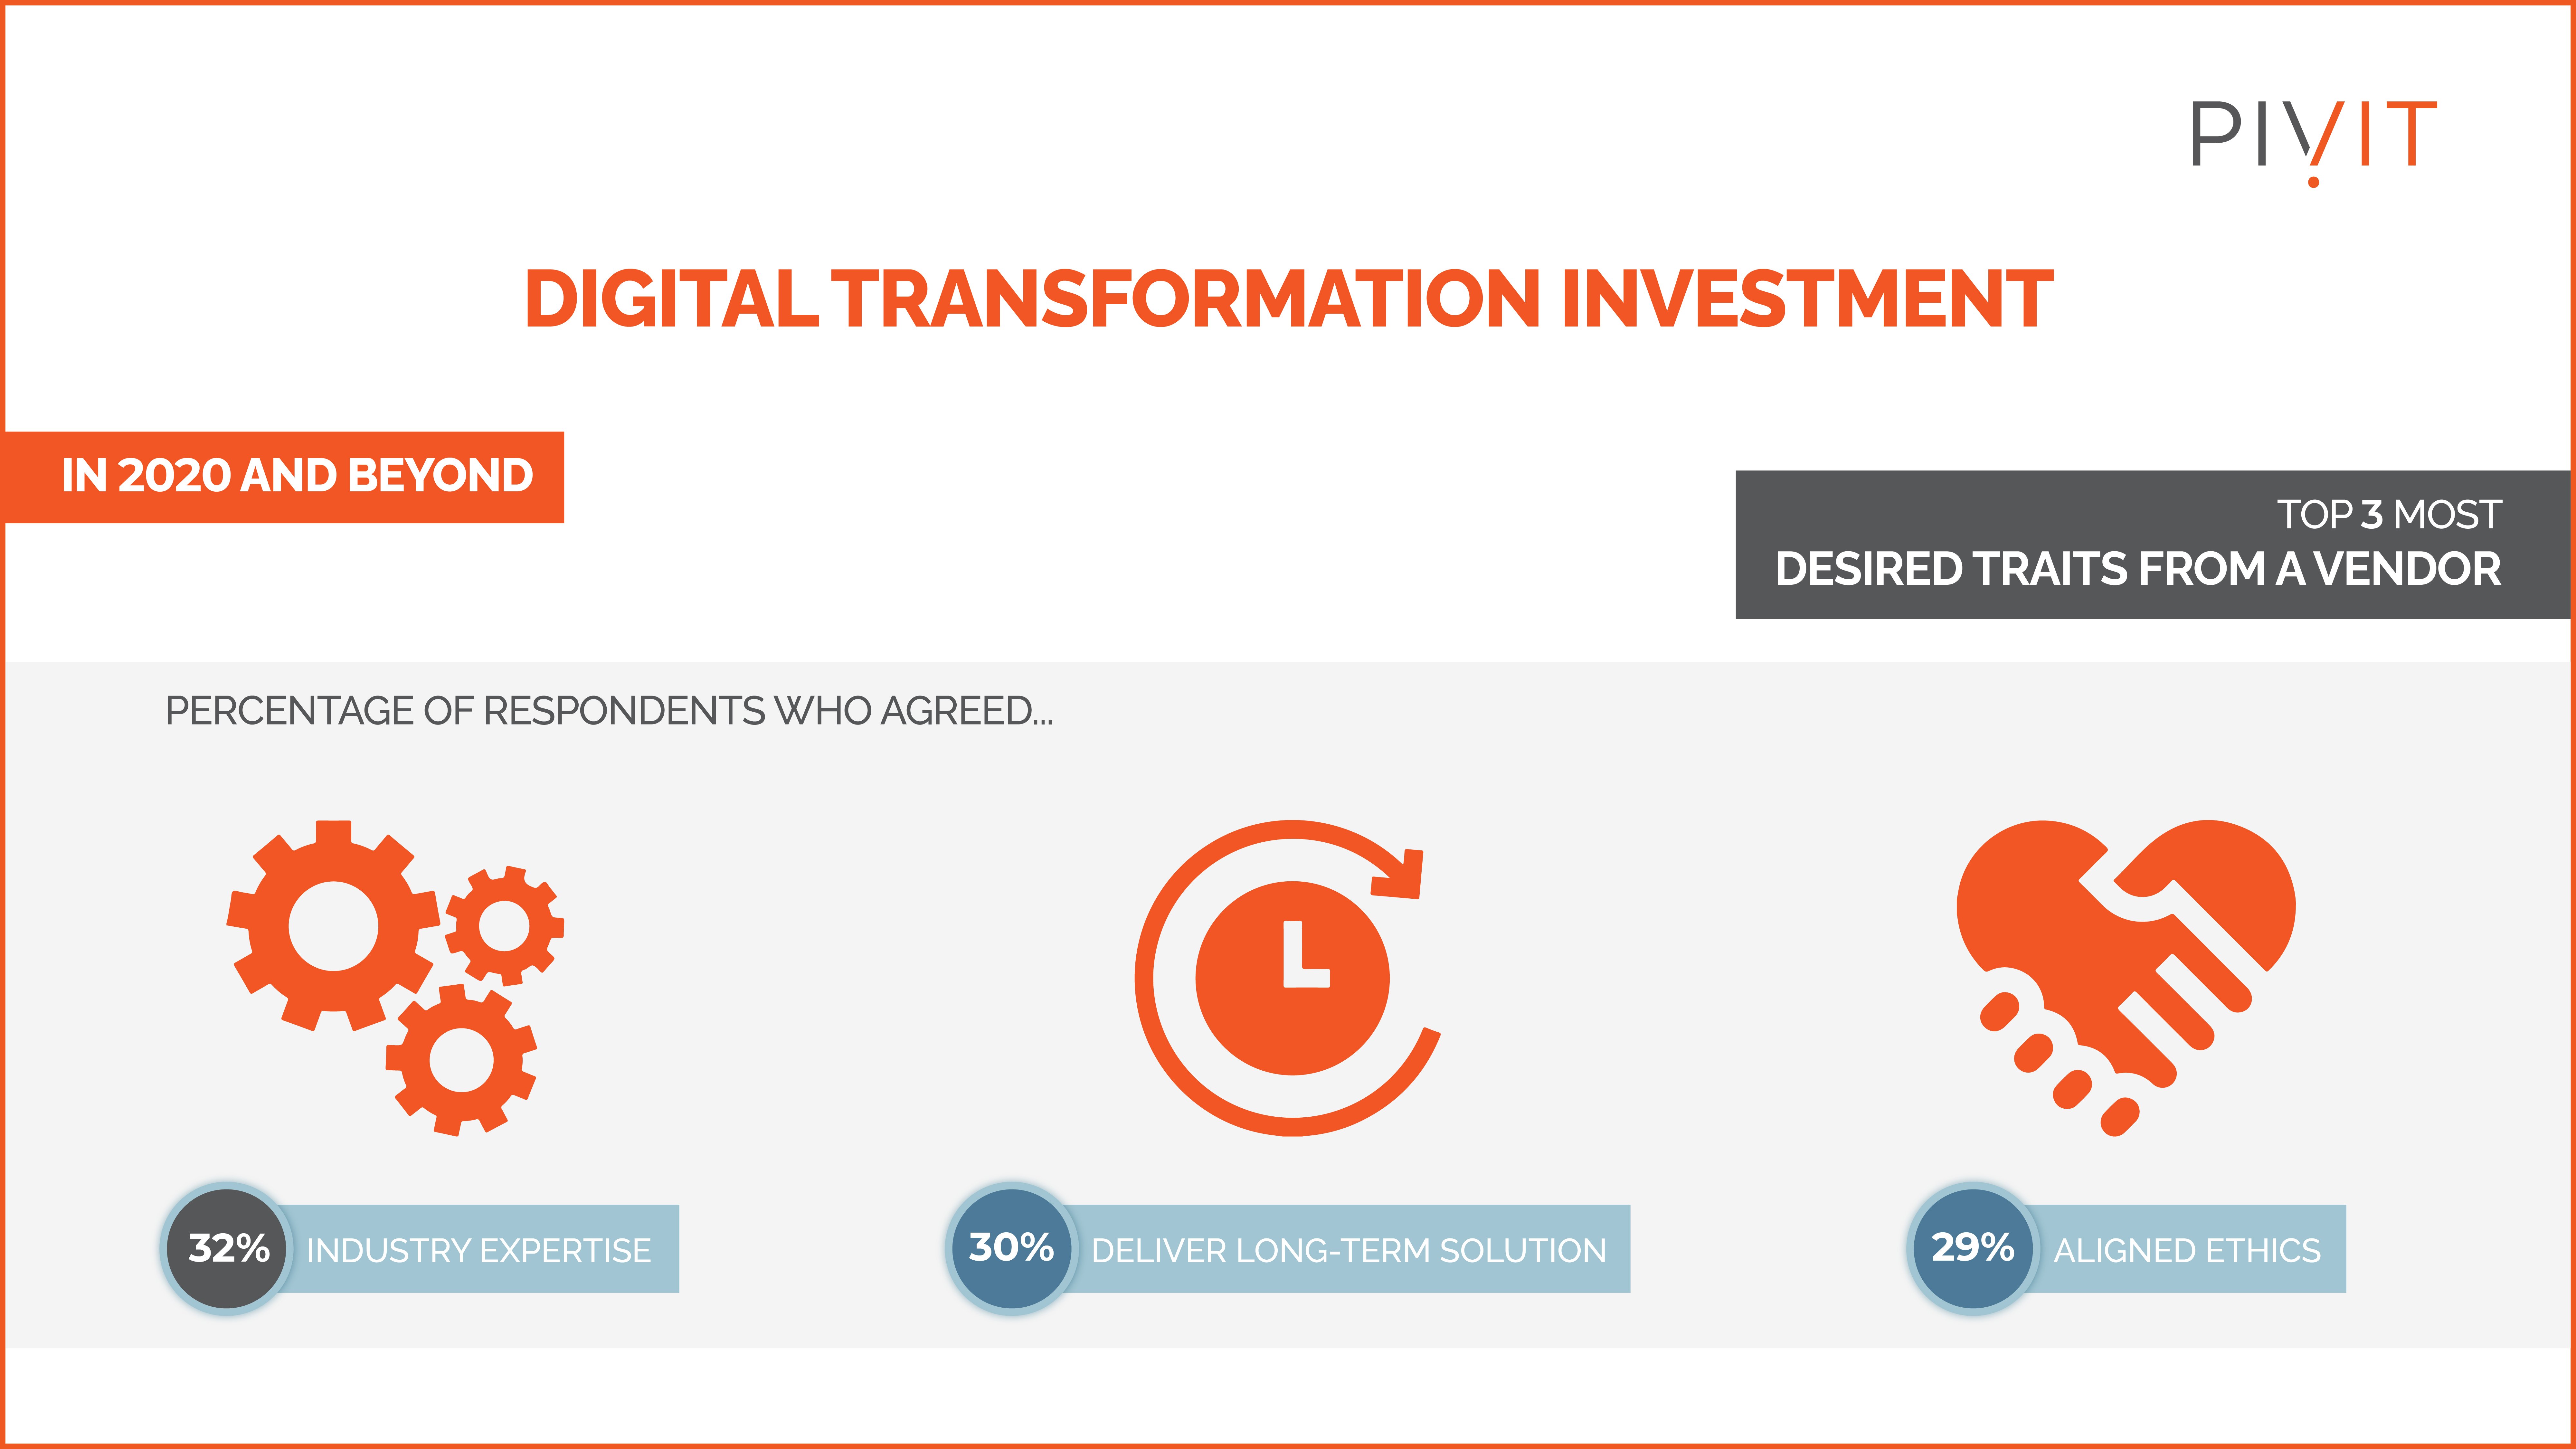 Digital transformation investment figures